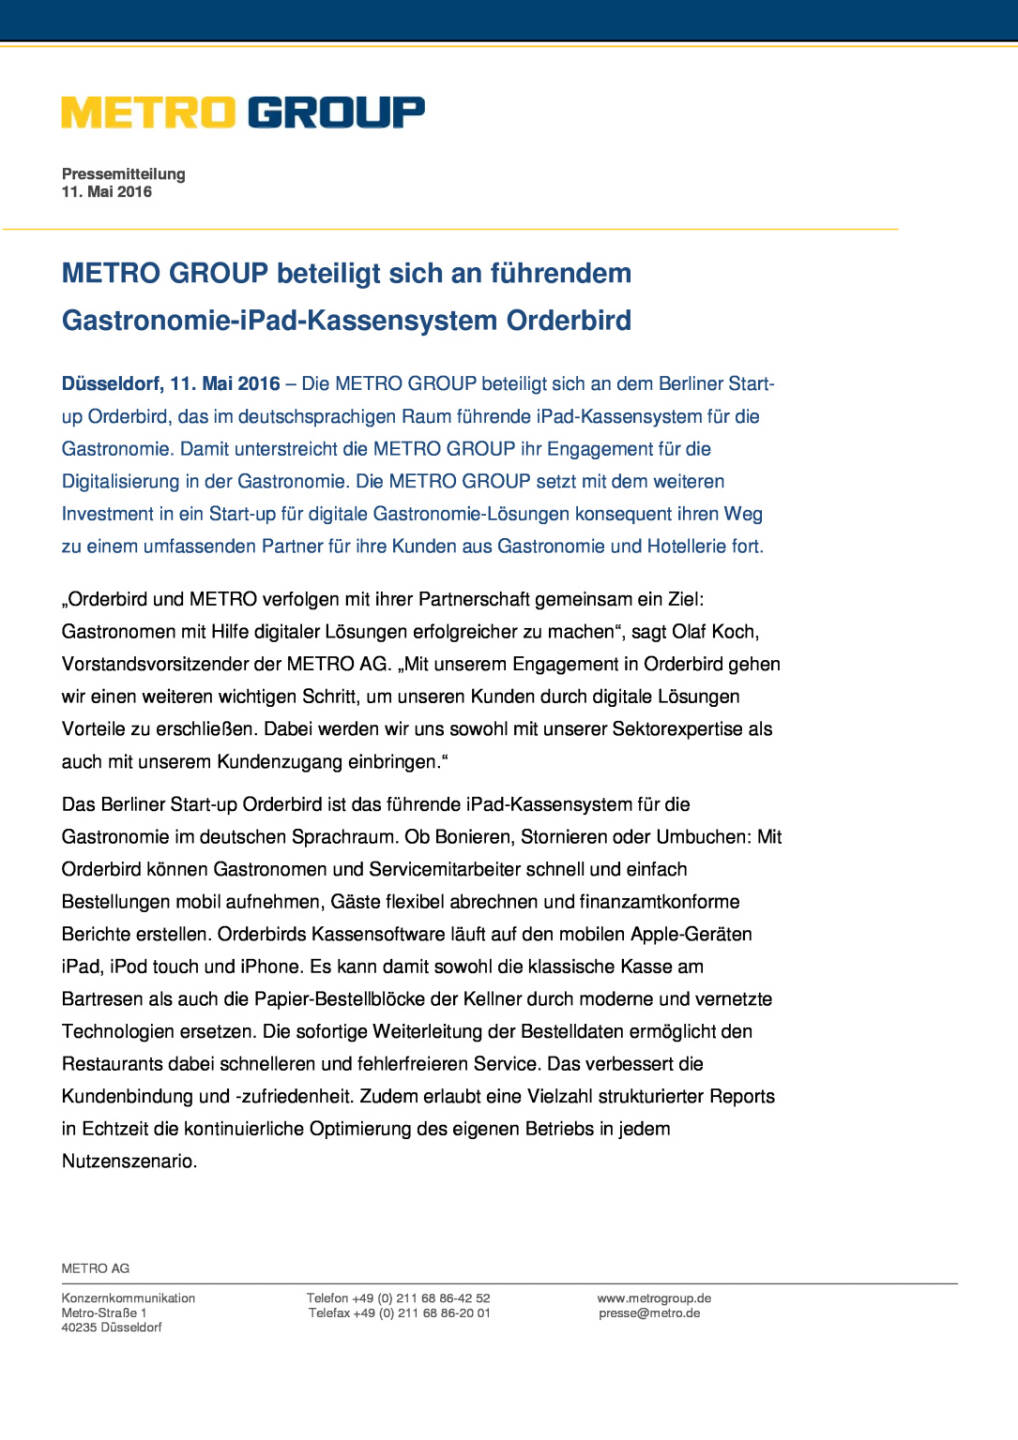 Metro Group beteiligt sich an dem Berliner Start-up Orderbird, Seite 1/2, komplettes Dokument unter http://boerse-social.com/static/uploads/file_1033_metro_group_beteiligt_sich_an_dem_berliner_start-up_orderbird.pdf